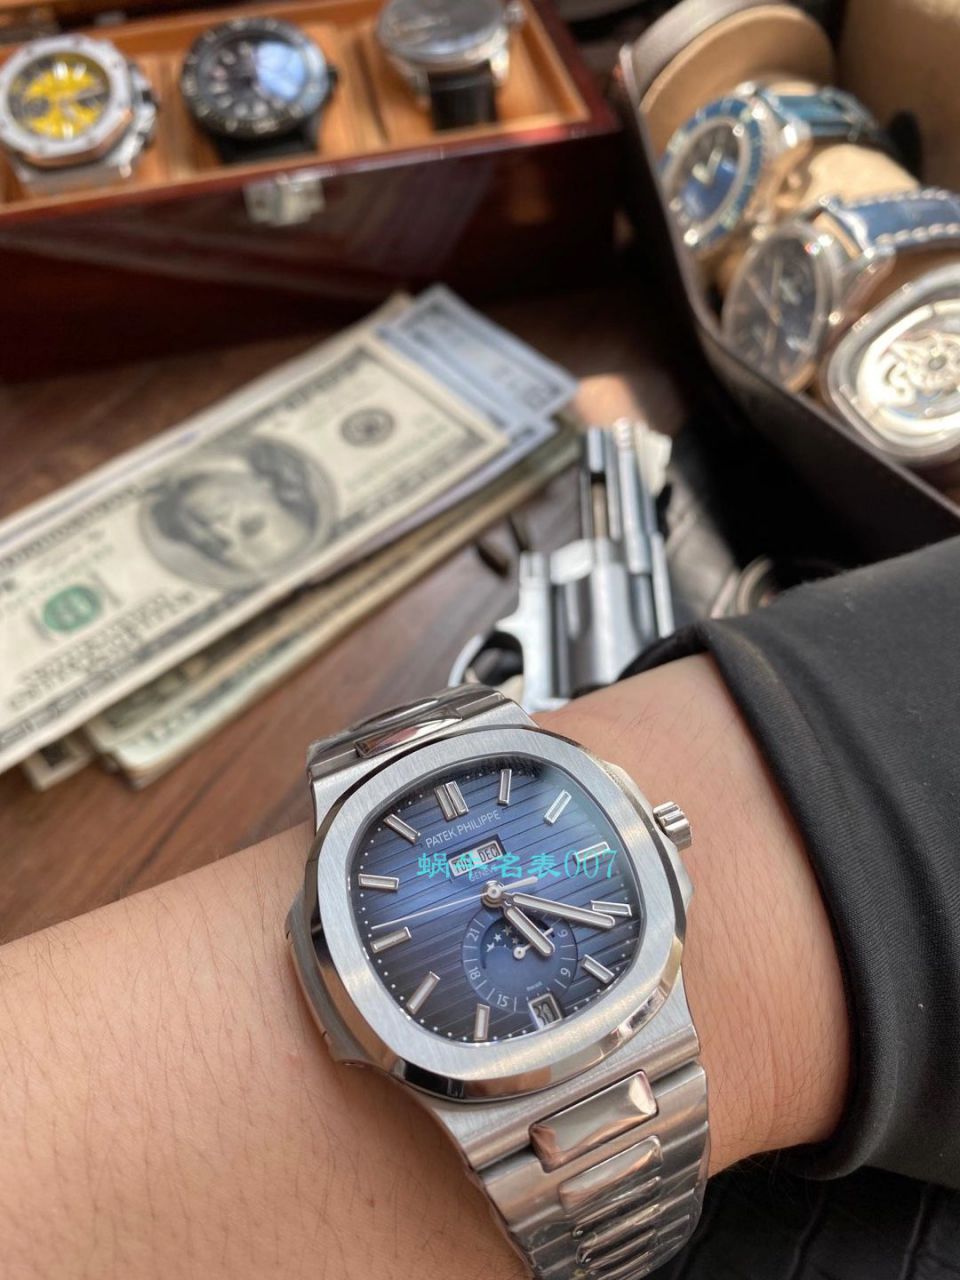 GR厂百达翡丽顶级复刻手表价格最好版本鹦鹉螺V2真月相5726/1A-010皮带款 / BD323